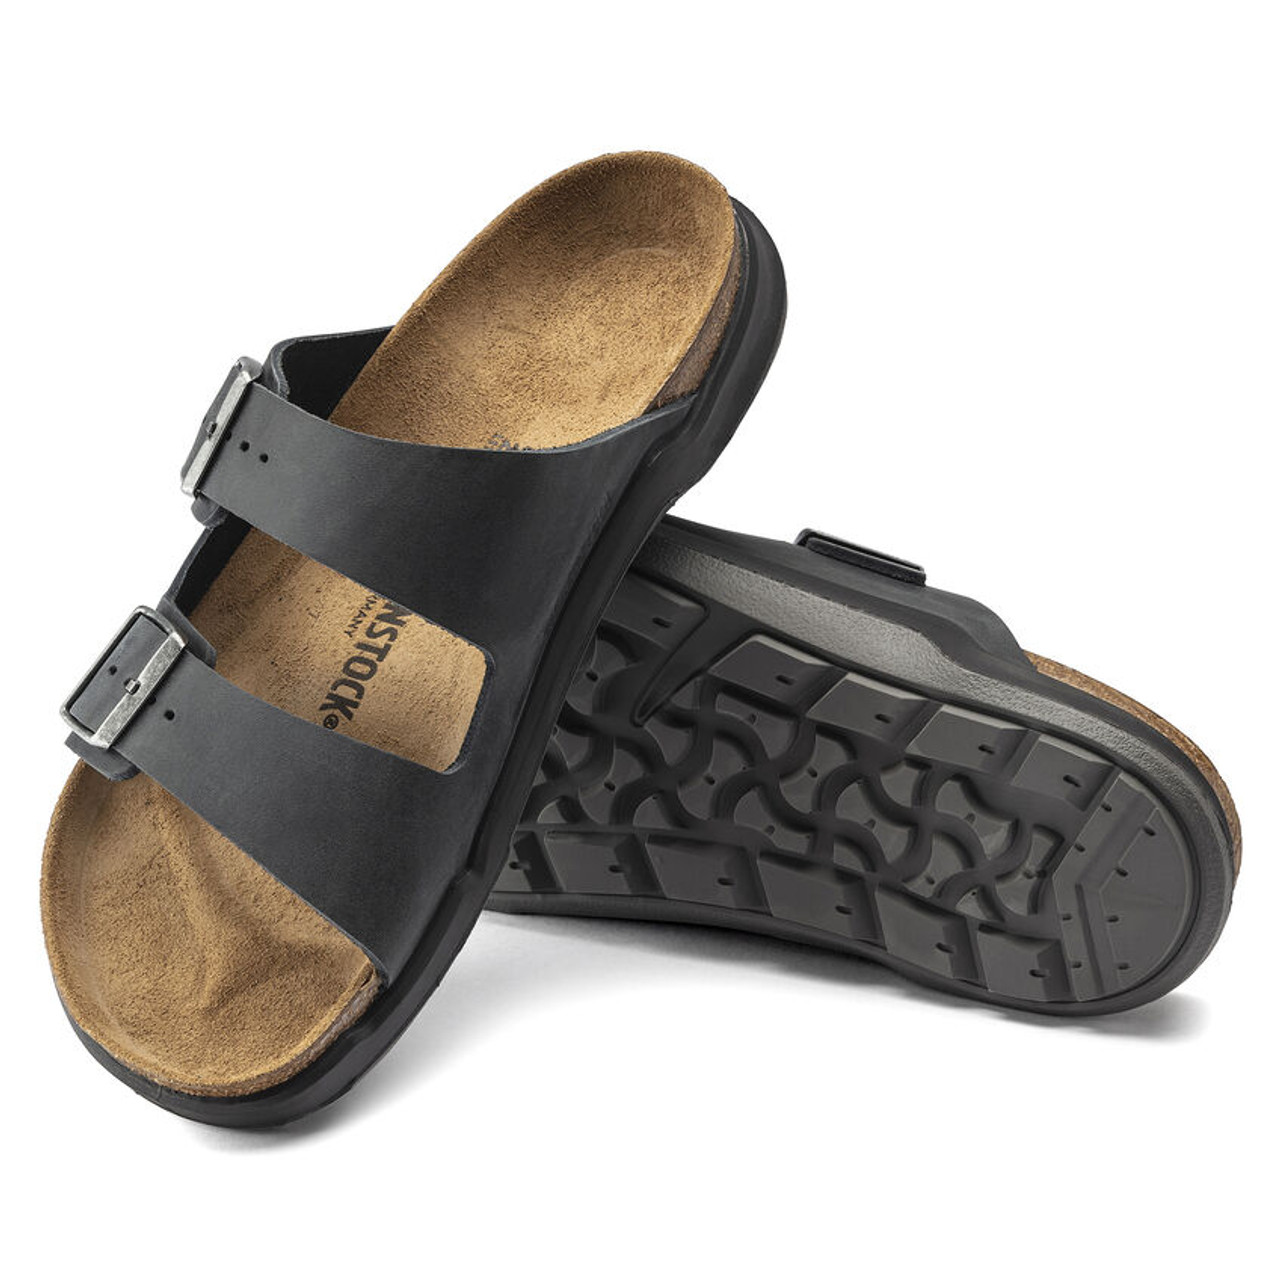 Birkenstock Milano sandals for Women - Black in UAE